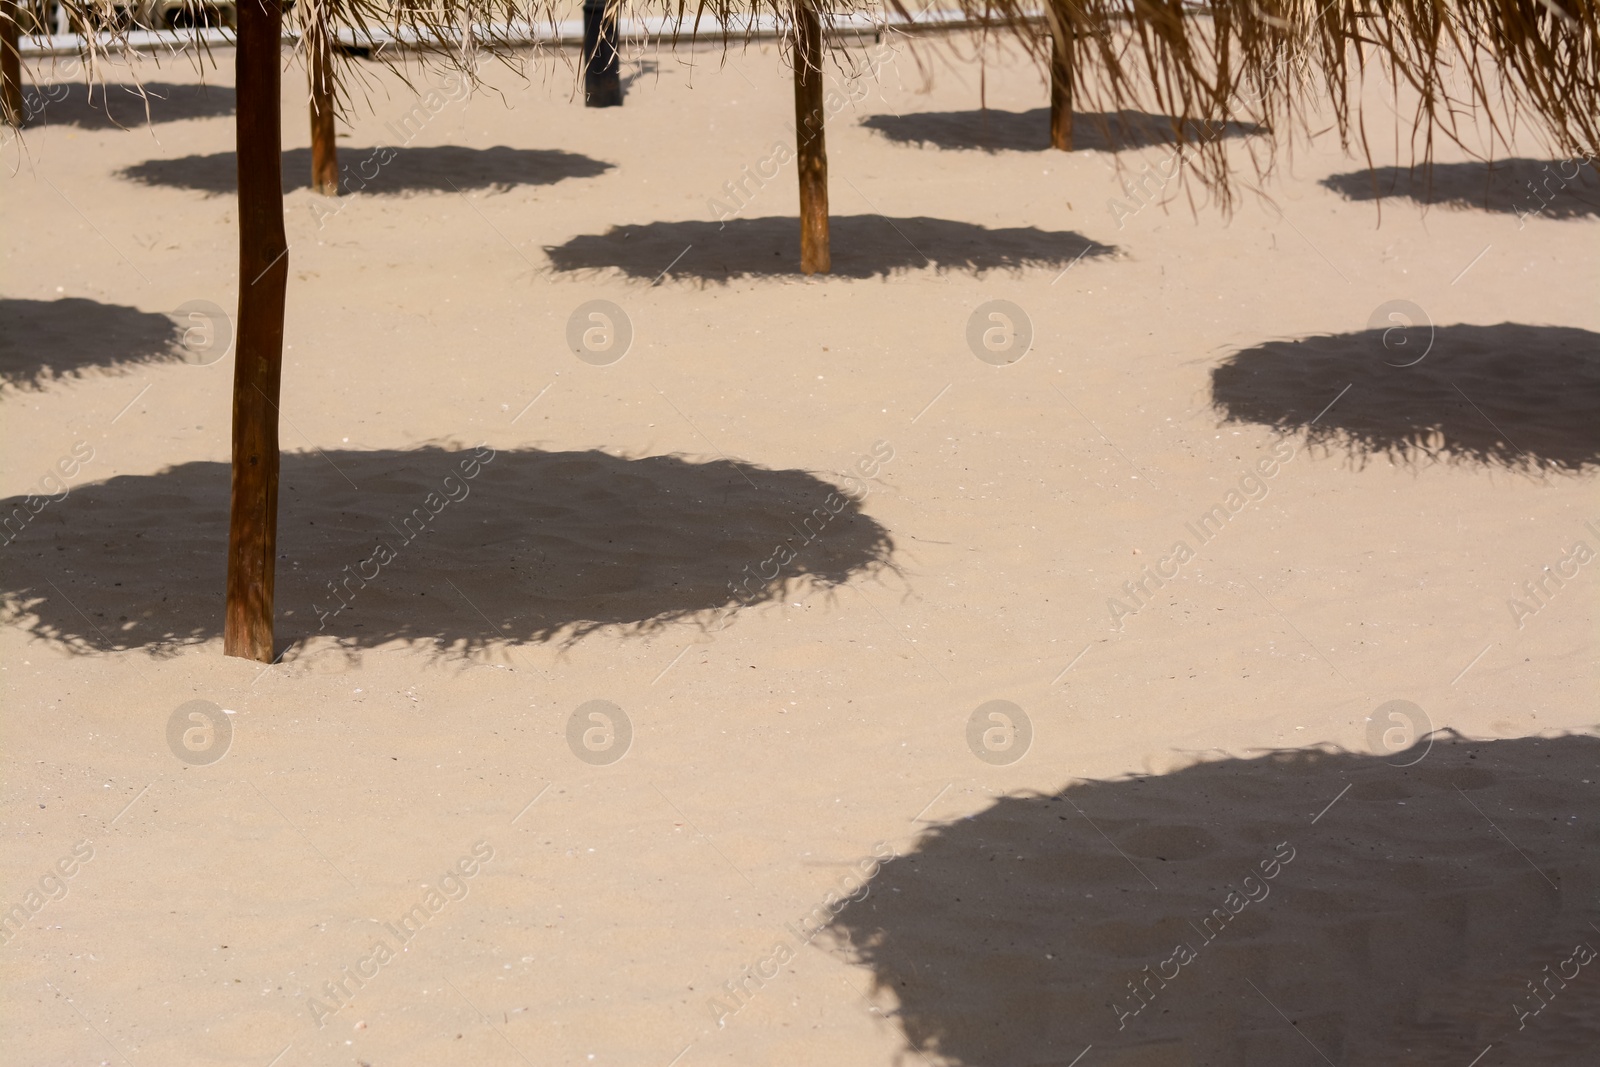 Photo of Shadows from umbrellas on sandy beach. Tropical resort